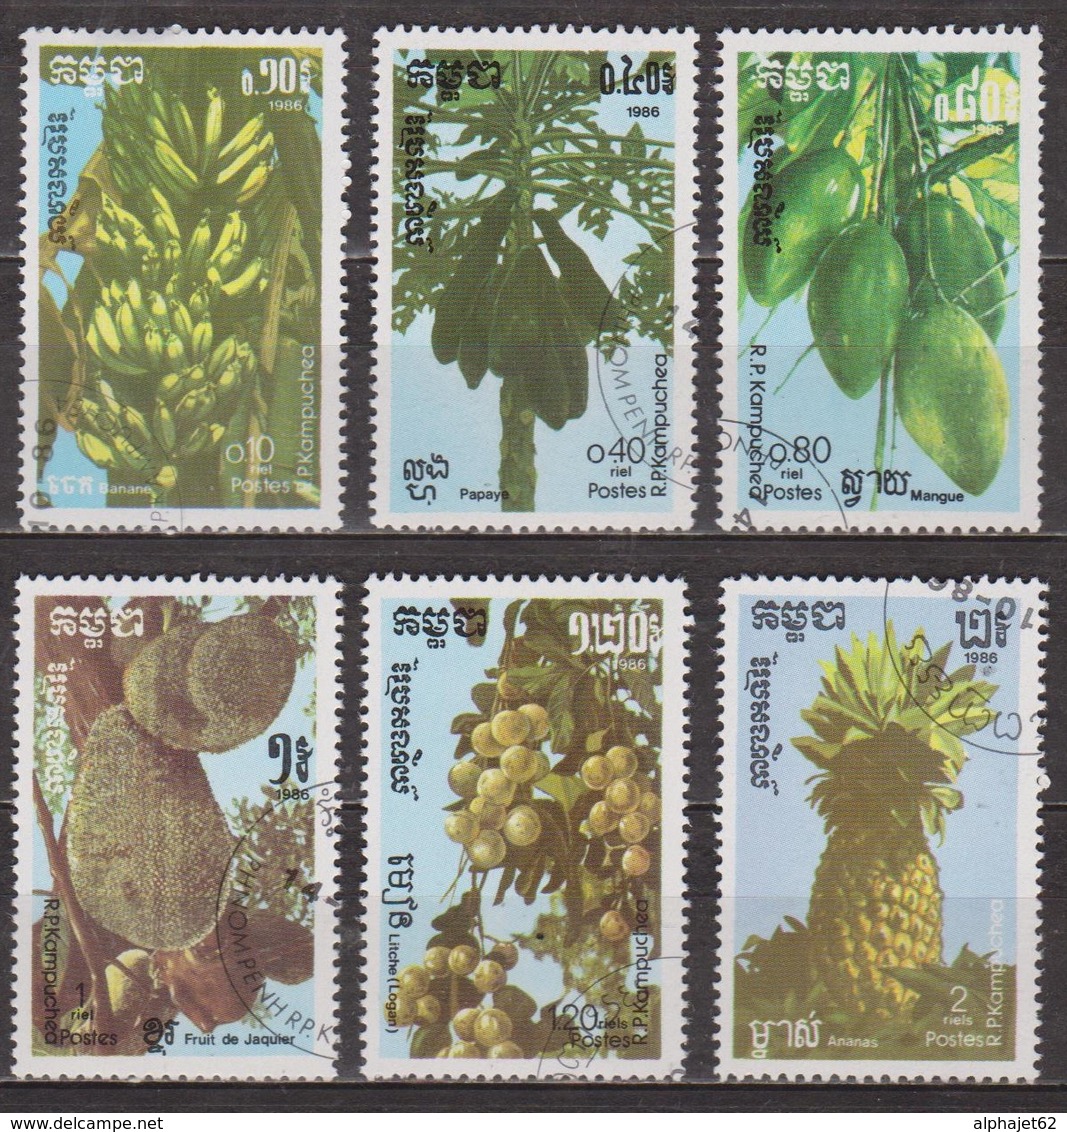 Flore - Fruits Tropicaux - KAMPUCHEA - Bananes, Papayes, Mangues, Jaques, Letchis, Ananas - N° 681 à 686 - 1986 - Kampuchea